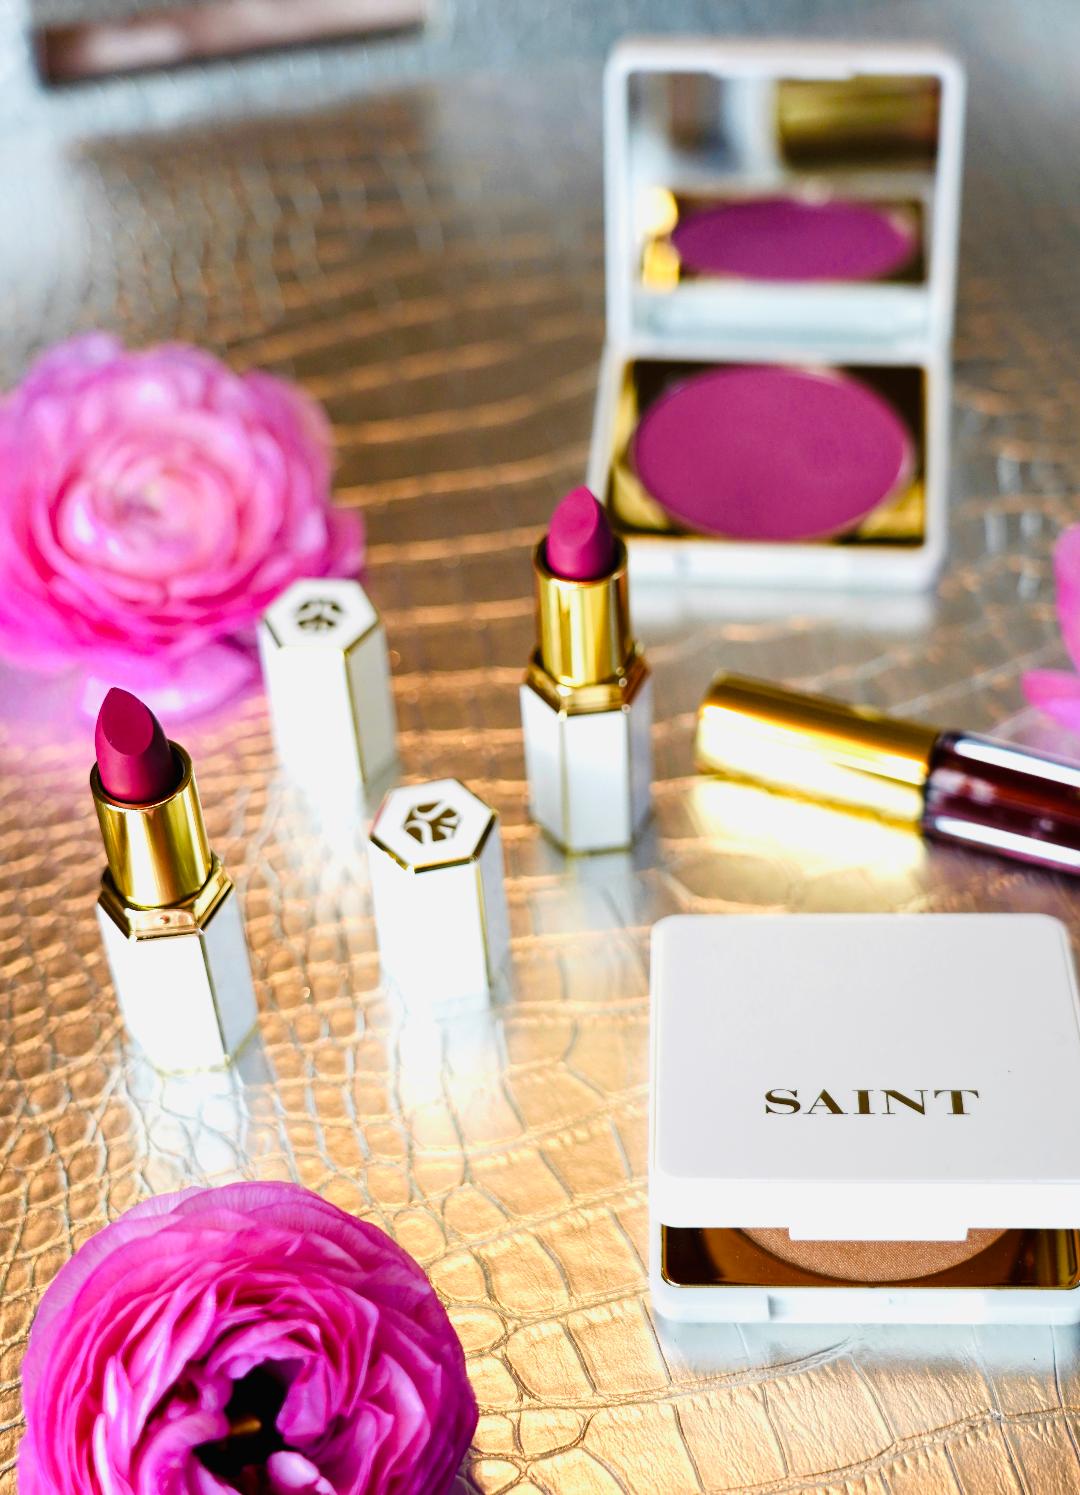 3 Reasons To Love Saint Cosmetics